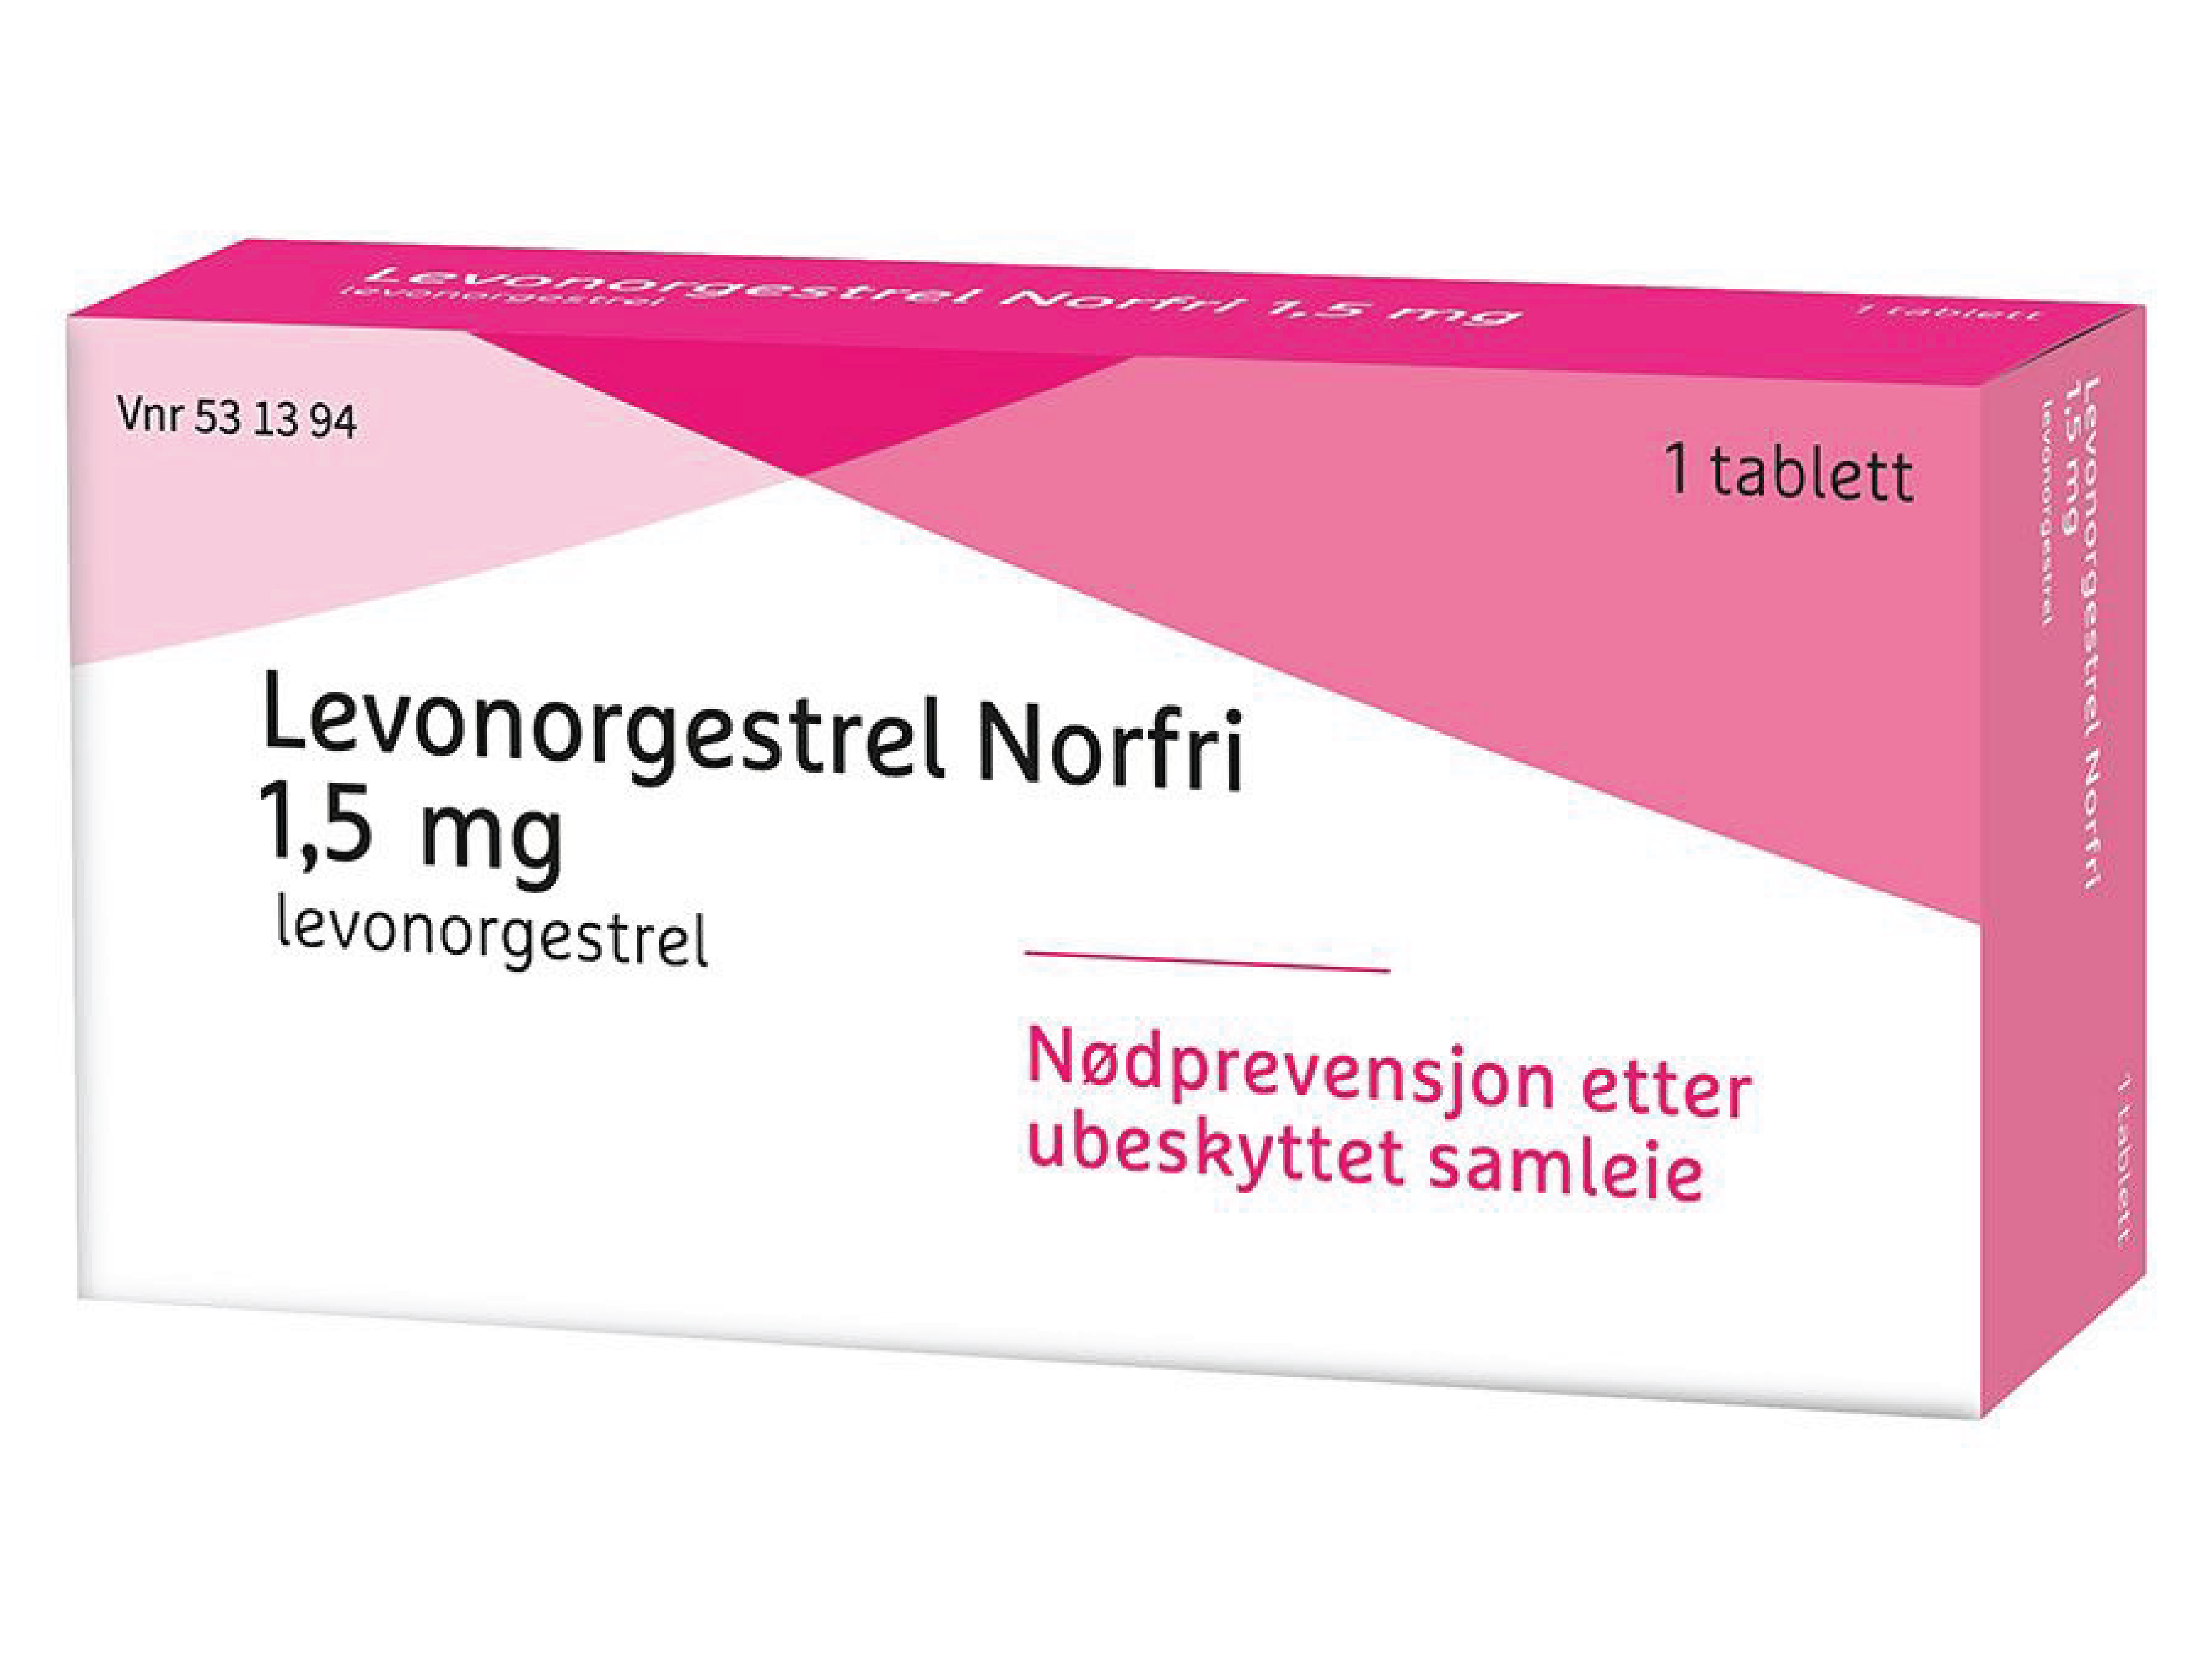 Levonorgestrel Norfri 1,5 mg tablett, 1 stk.